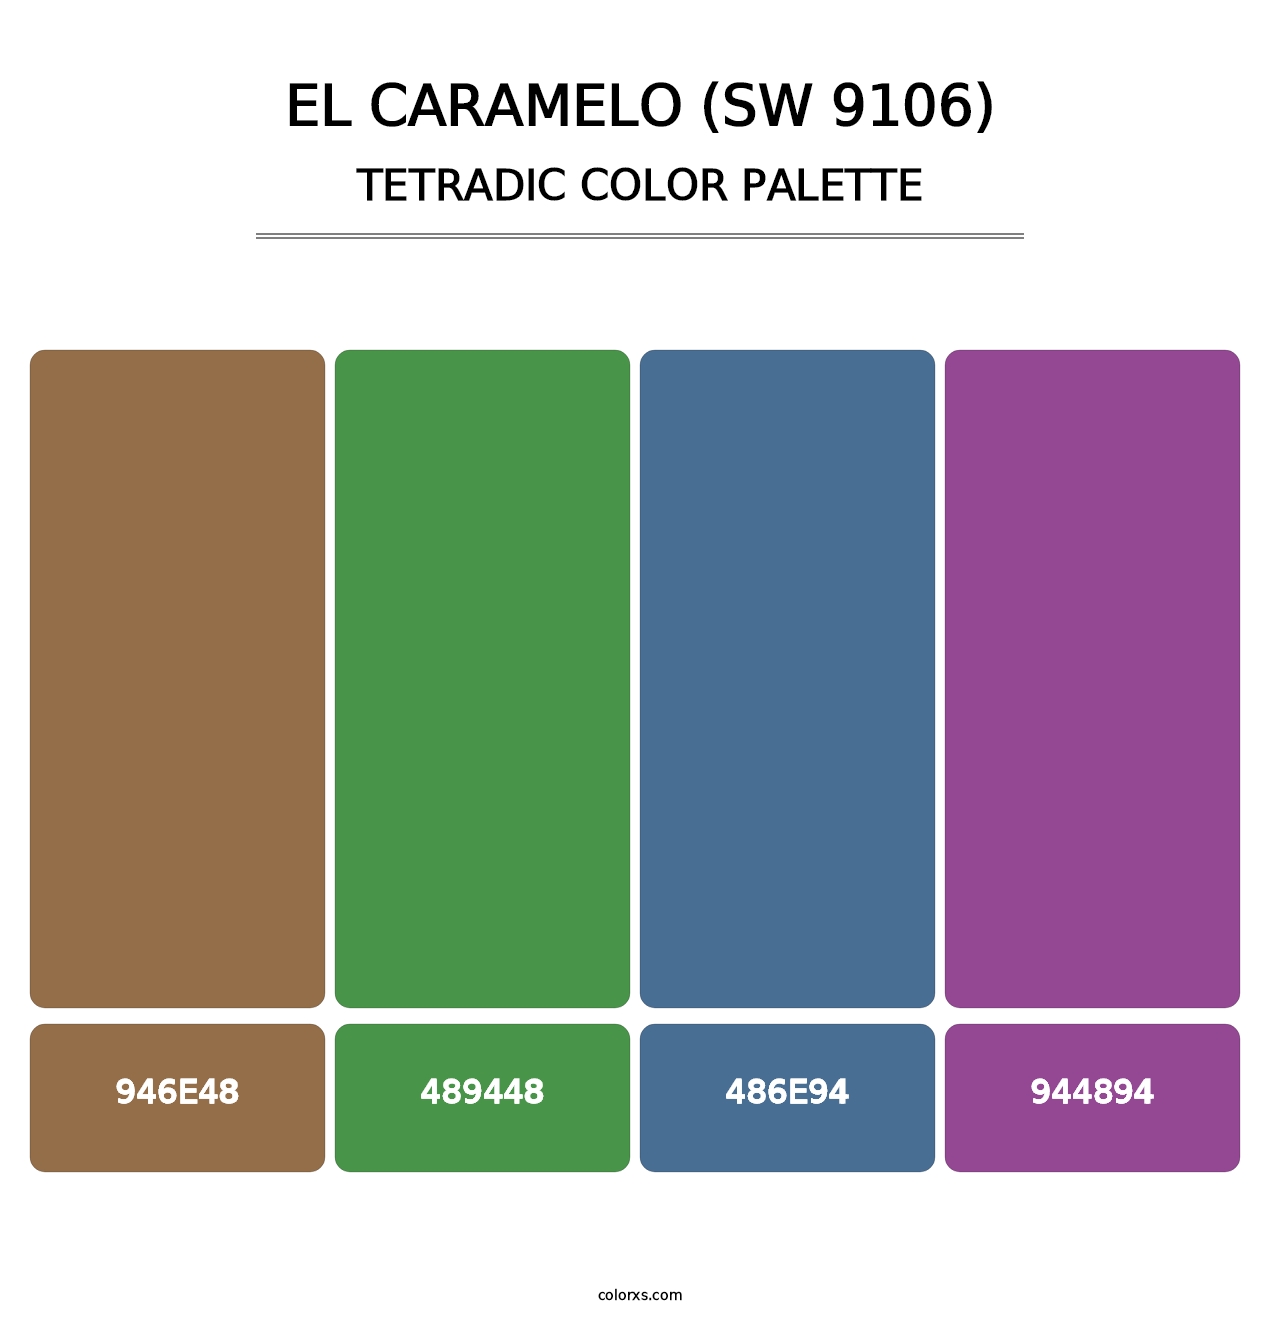 El Caramelo (SW 9106) - Tetradic Color Palette